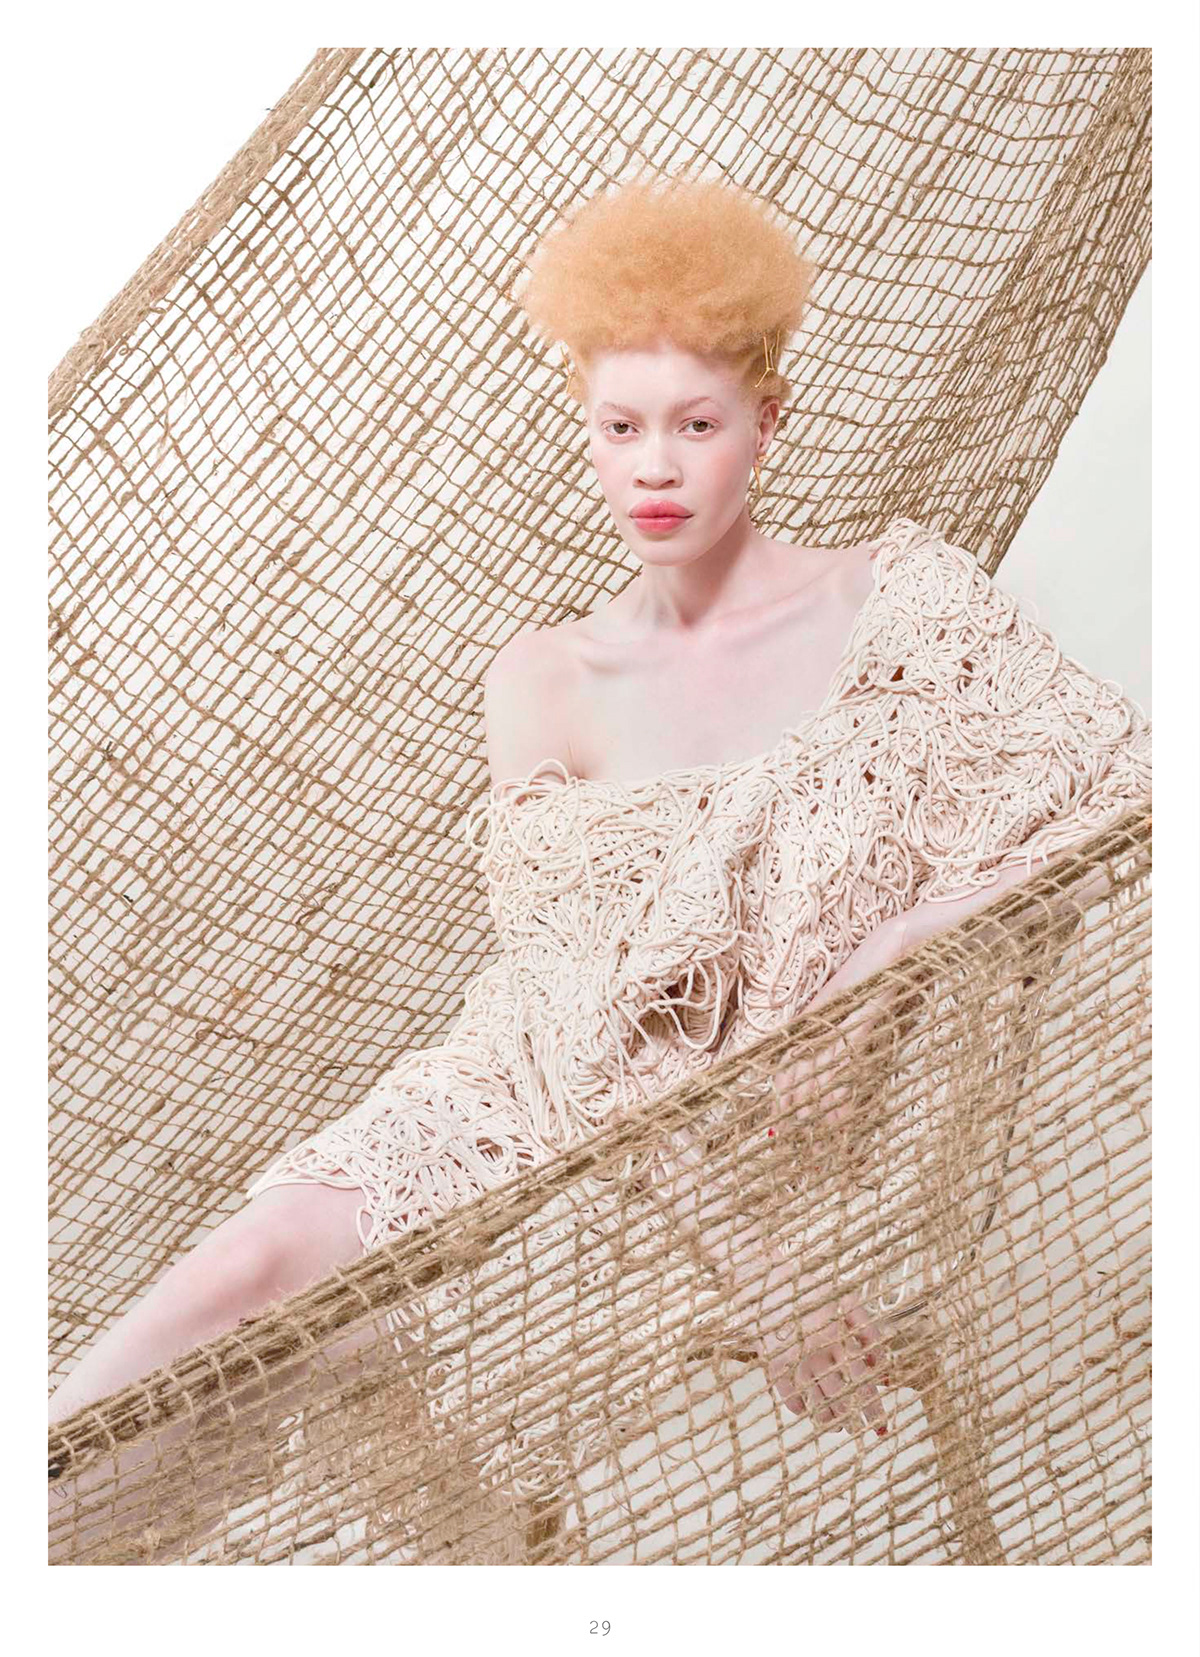 albino Fashion  Style magazine New York nyc art couture Female Model fashion photography